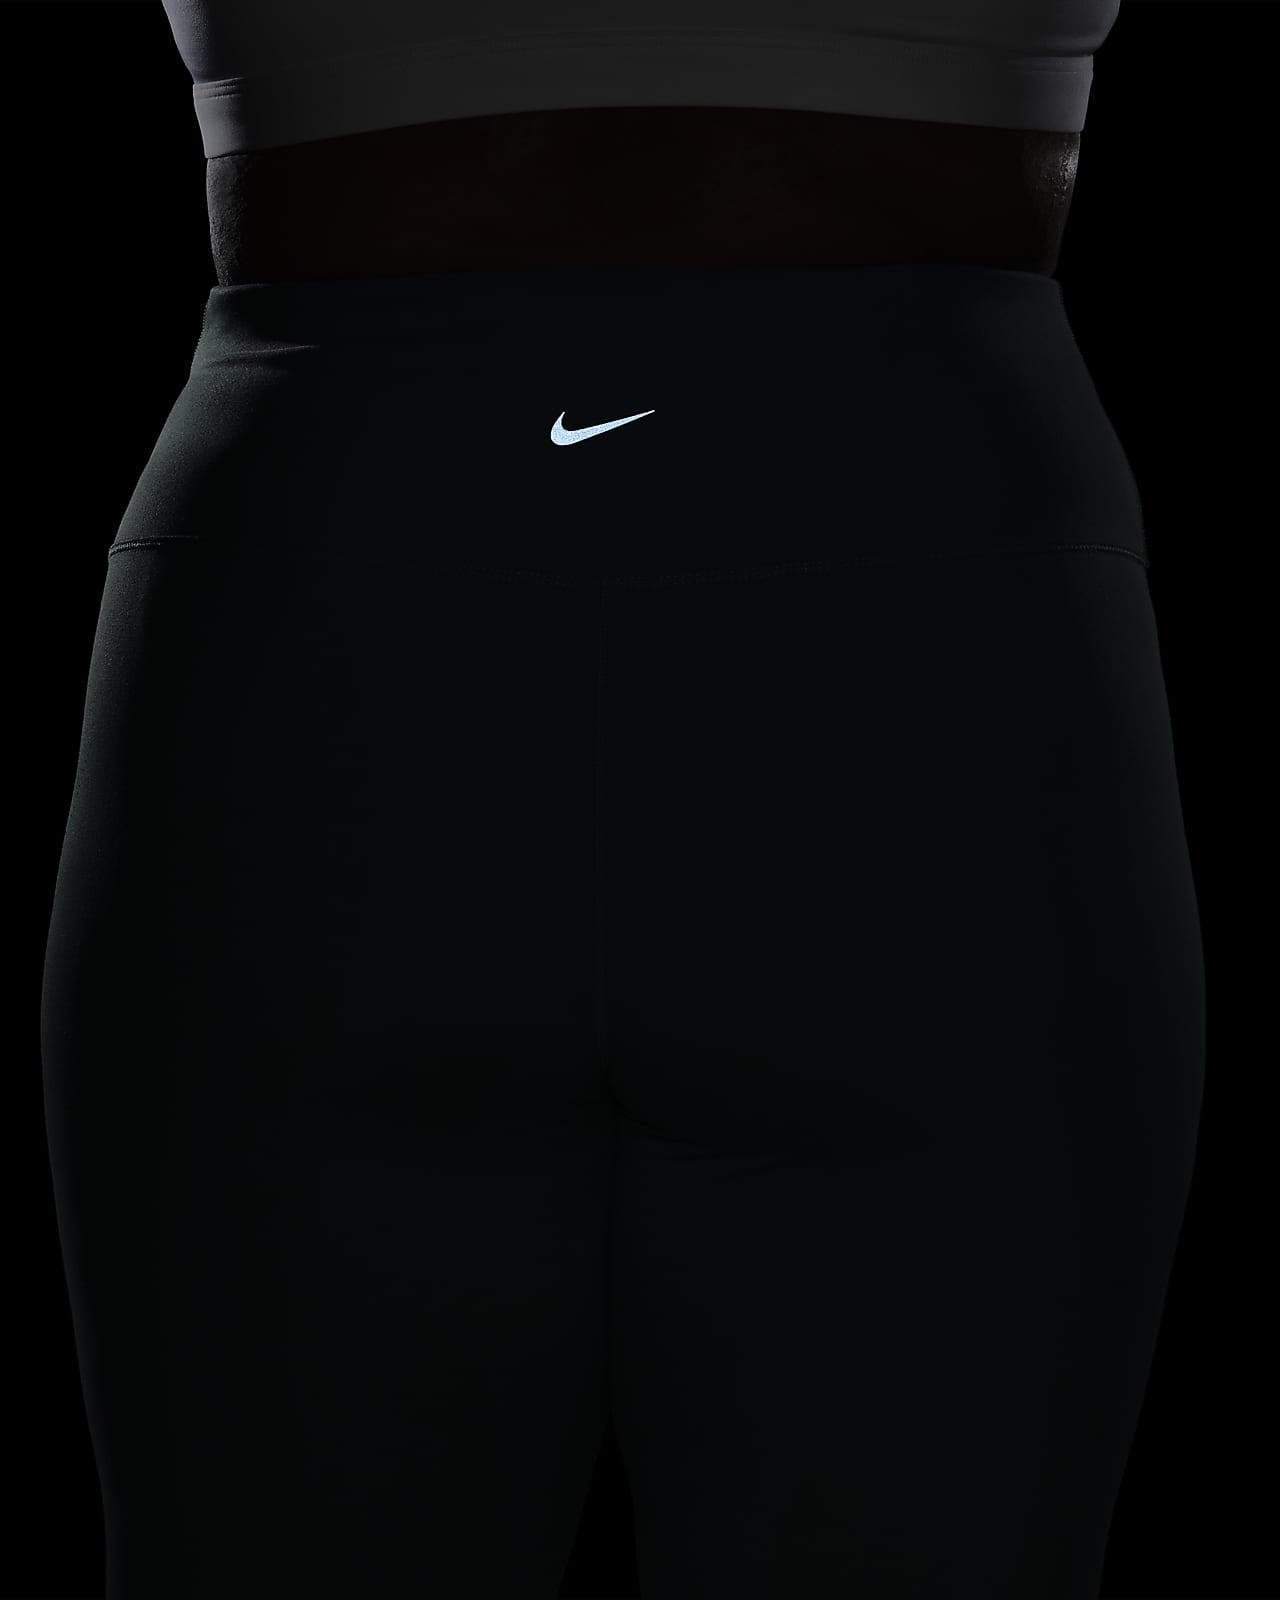 Nike Women's 7/8 Leggings High Waist Compression Leggings Blue Plus Size 2X  NEW